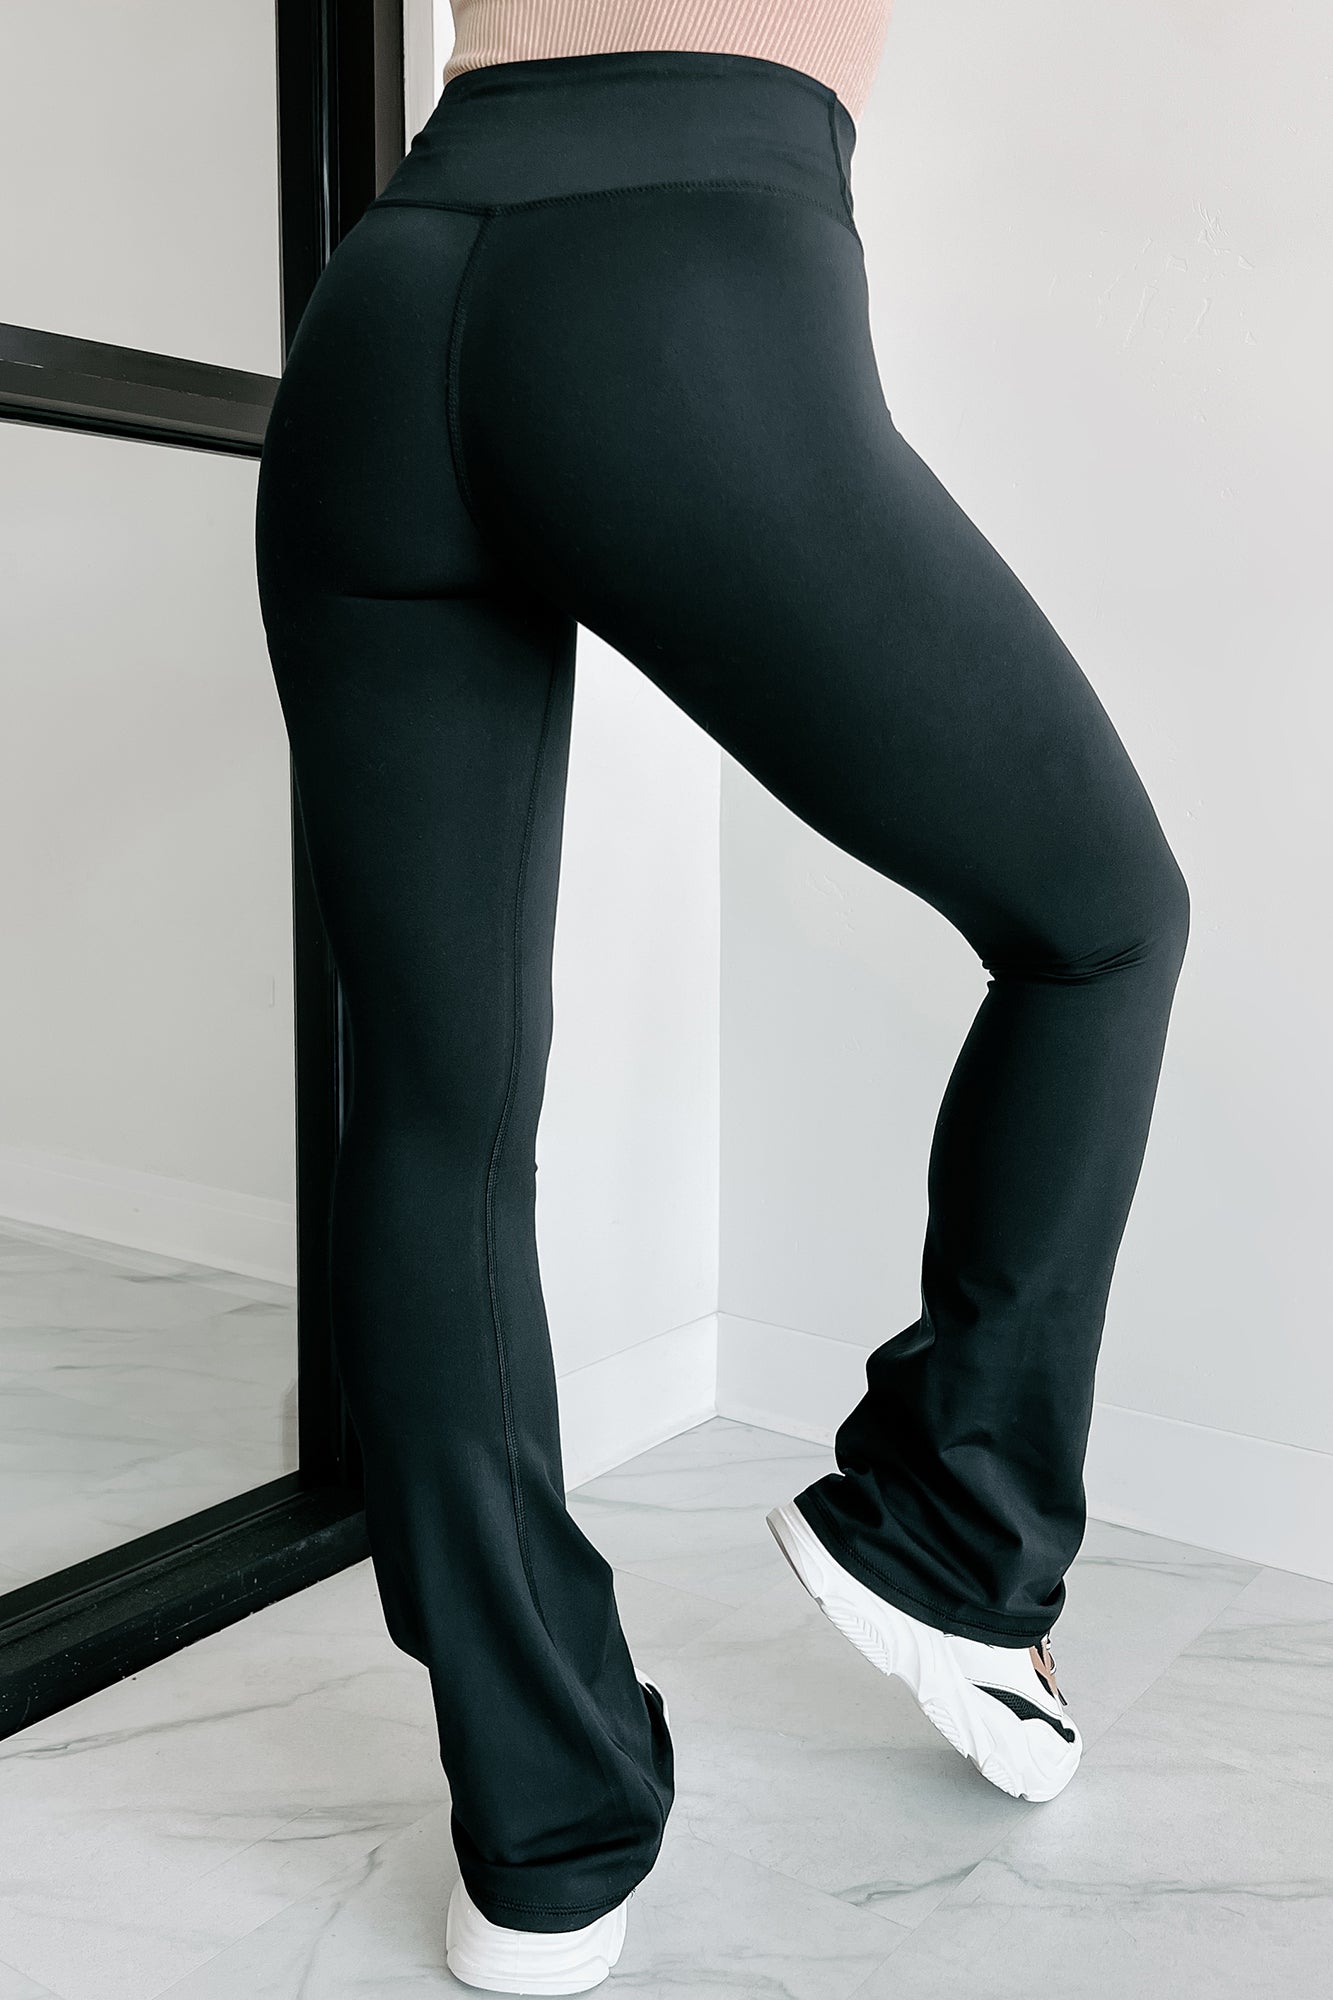 Lululemon Heather Gray Leggings 23” Size 2 - $27 - From sara